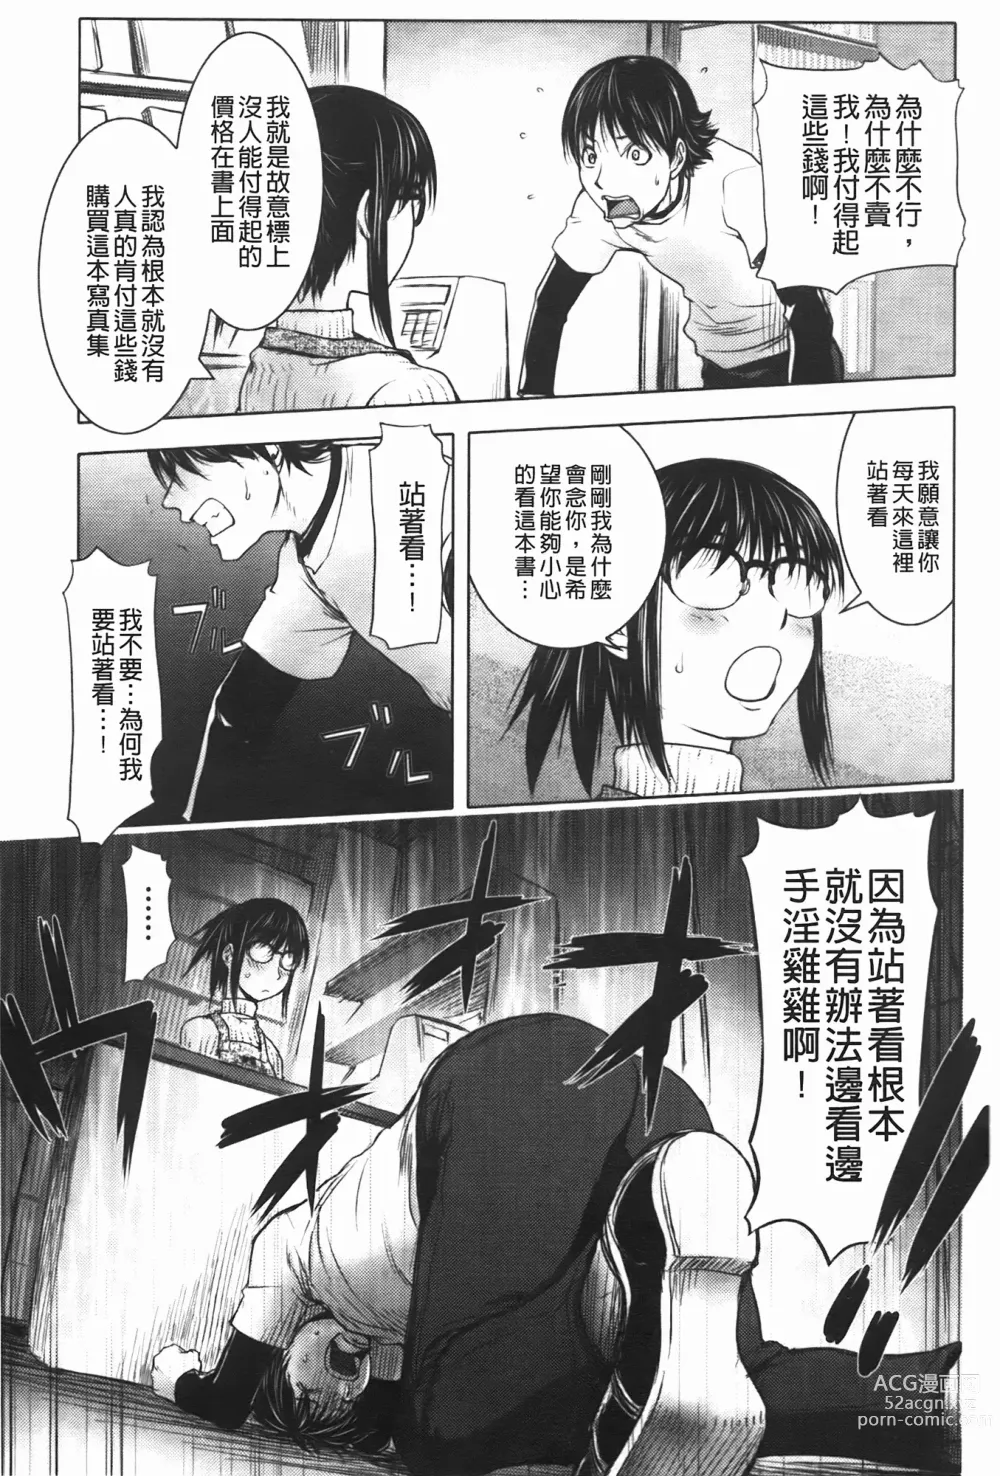 Page 5 of manga Midara Books 1-4